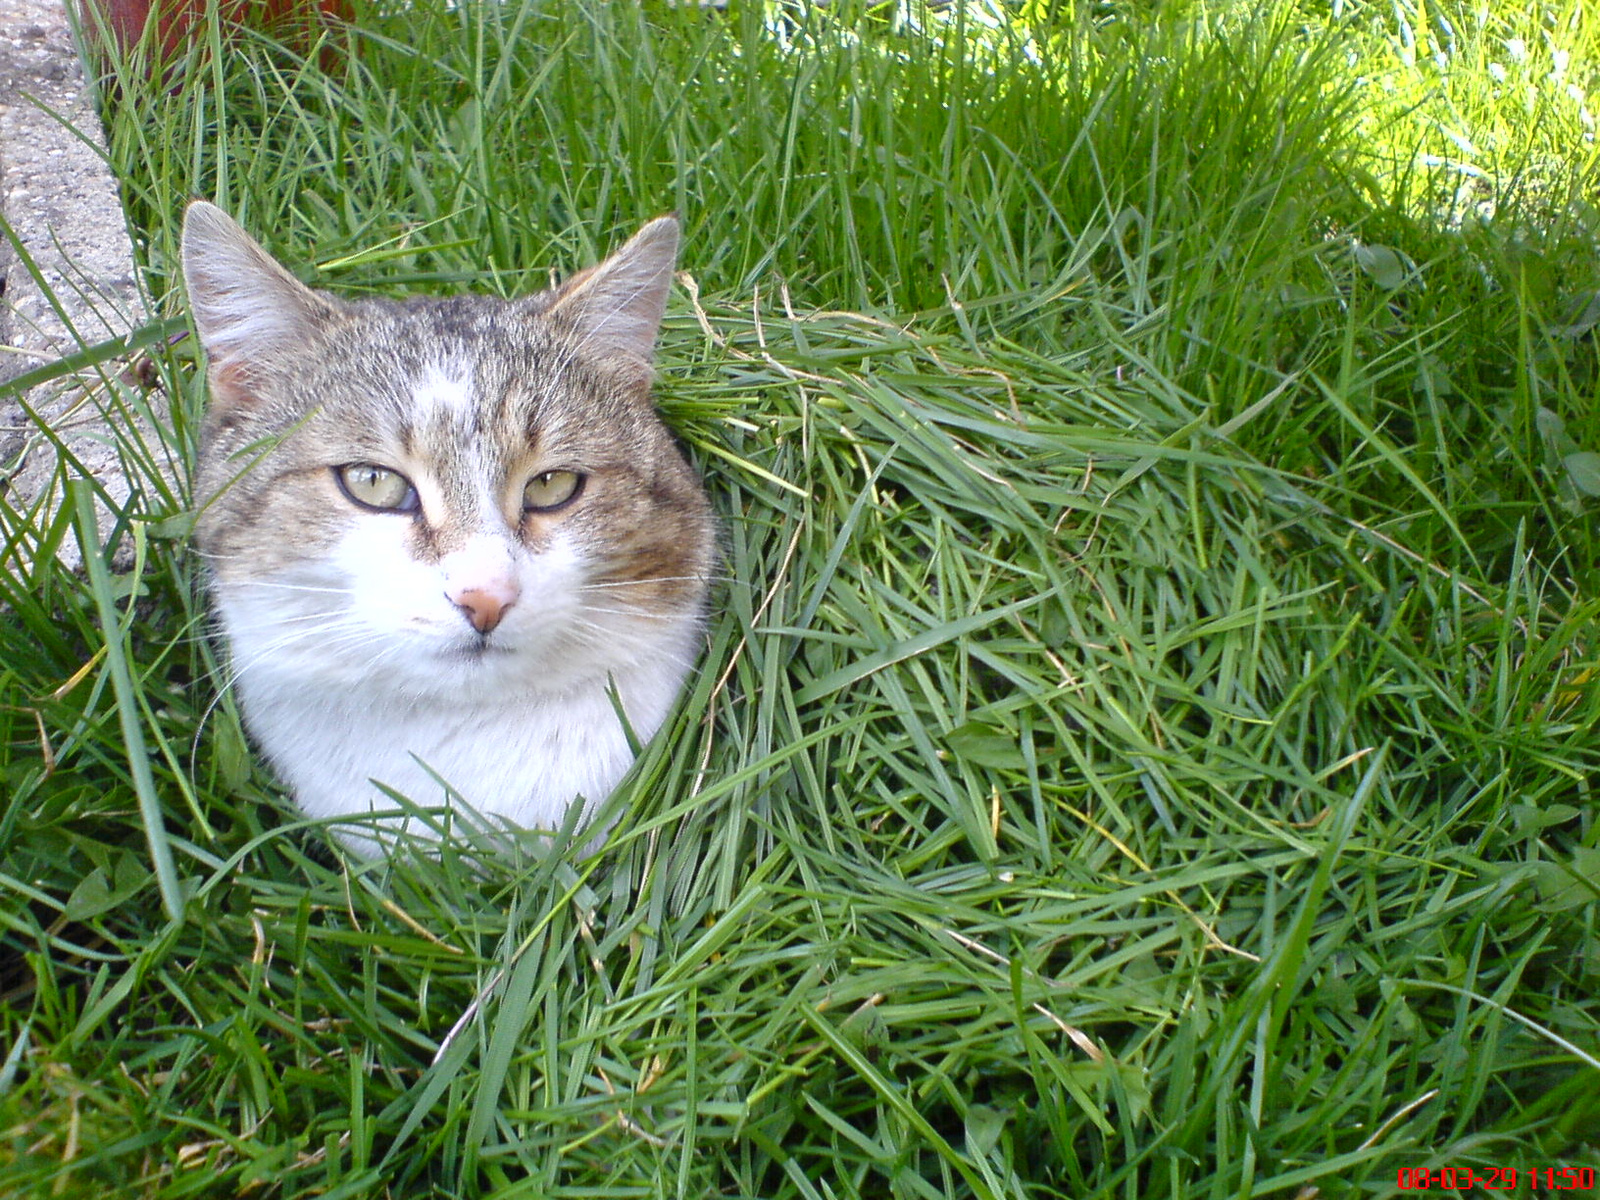 1 cat under the grass